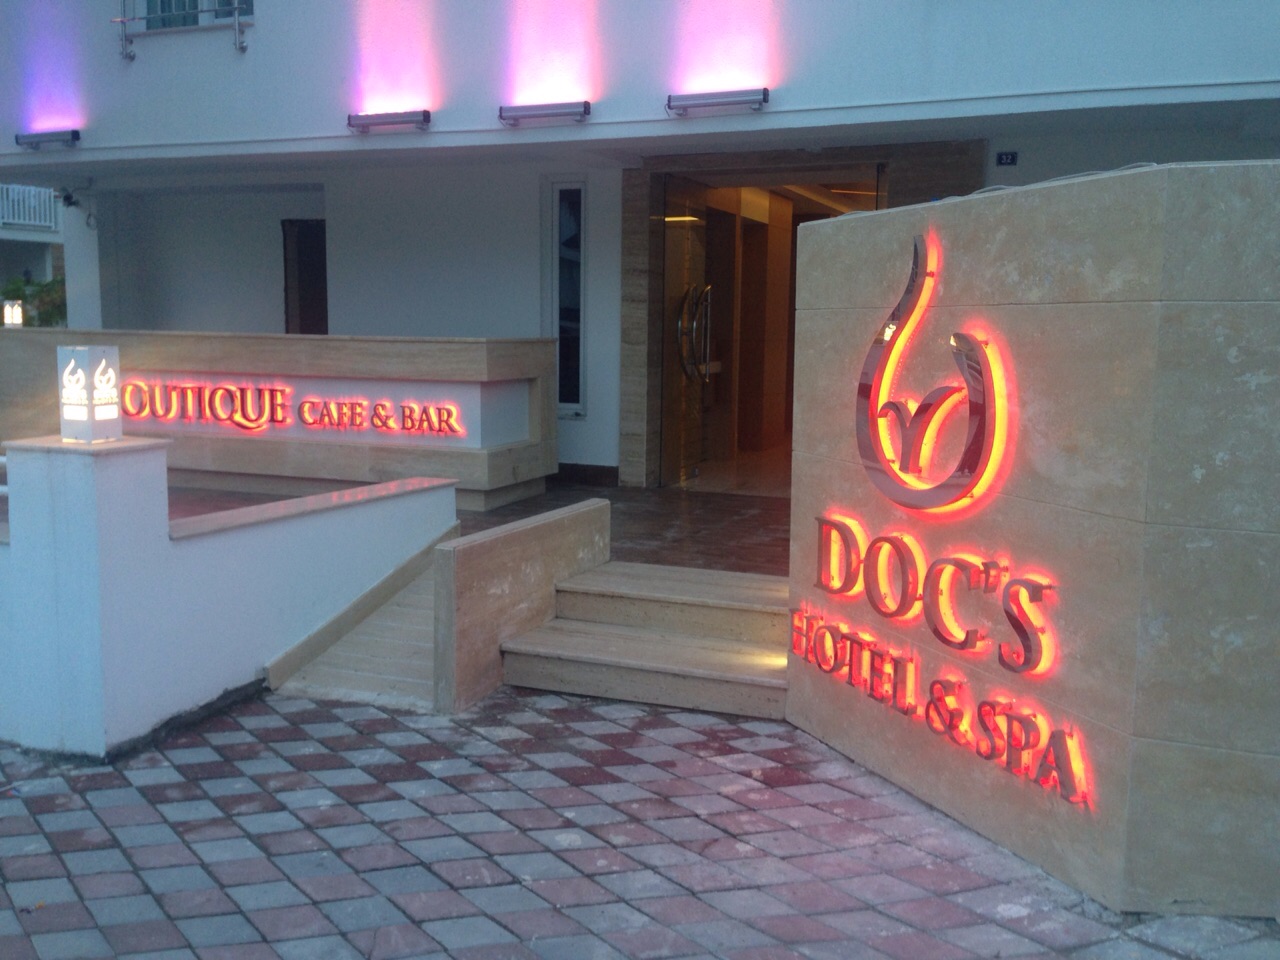 Doc's Hotel & Spa 304 Kalite Paslanmaz Krom Kutu Harf Antalya Tabela/ Kemer